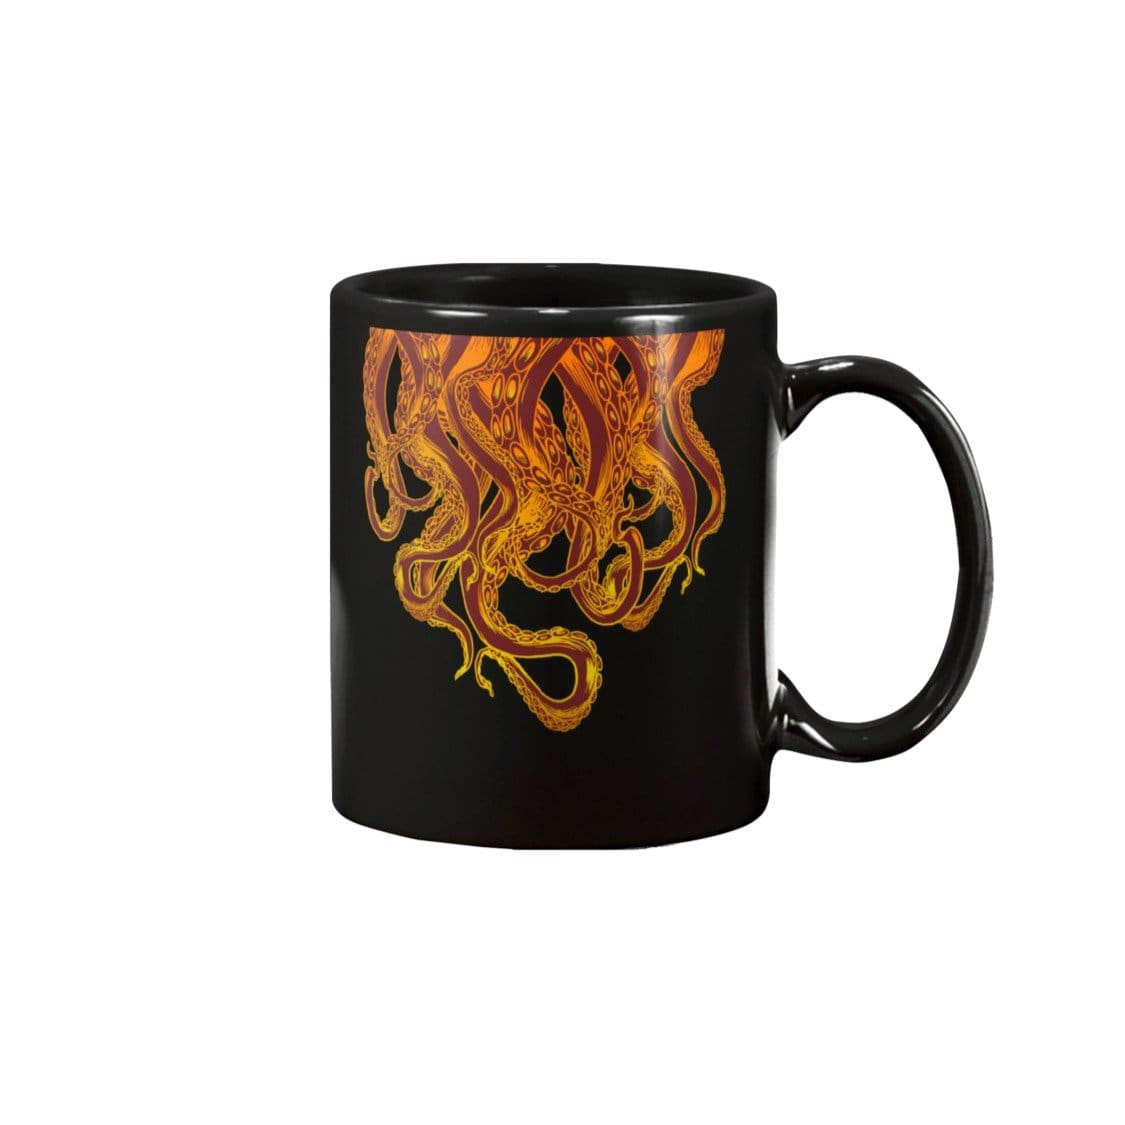 Cthulhu - Tentacles Bloodied 15oz Coffee Mug - Black / 15OZ - Mugs